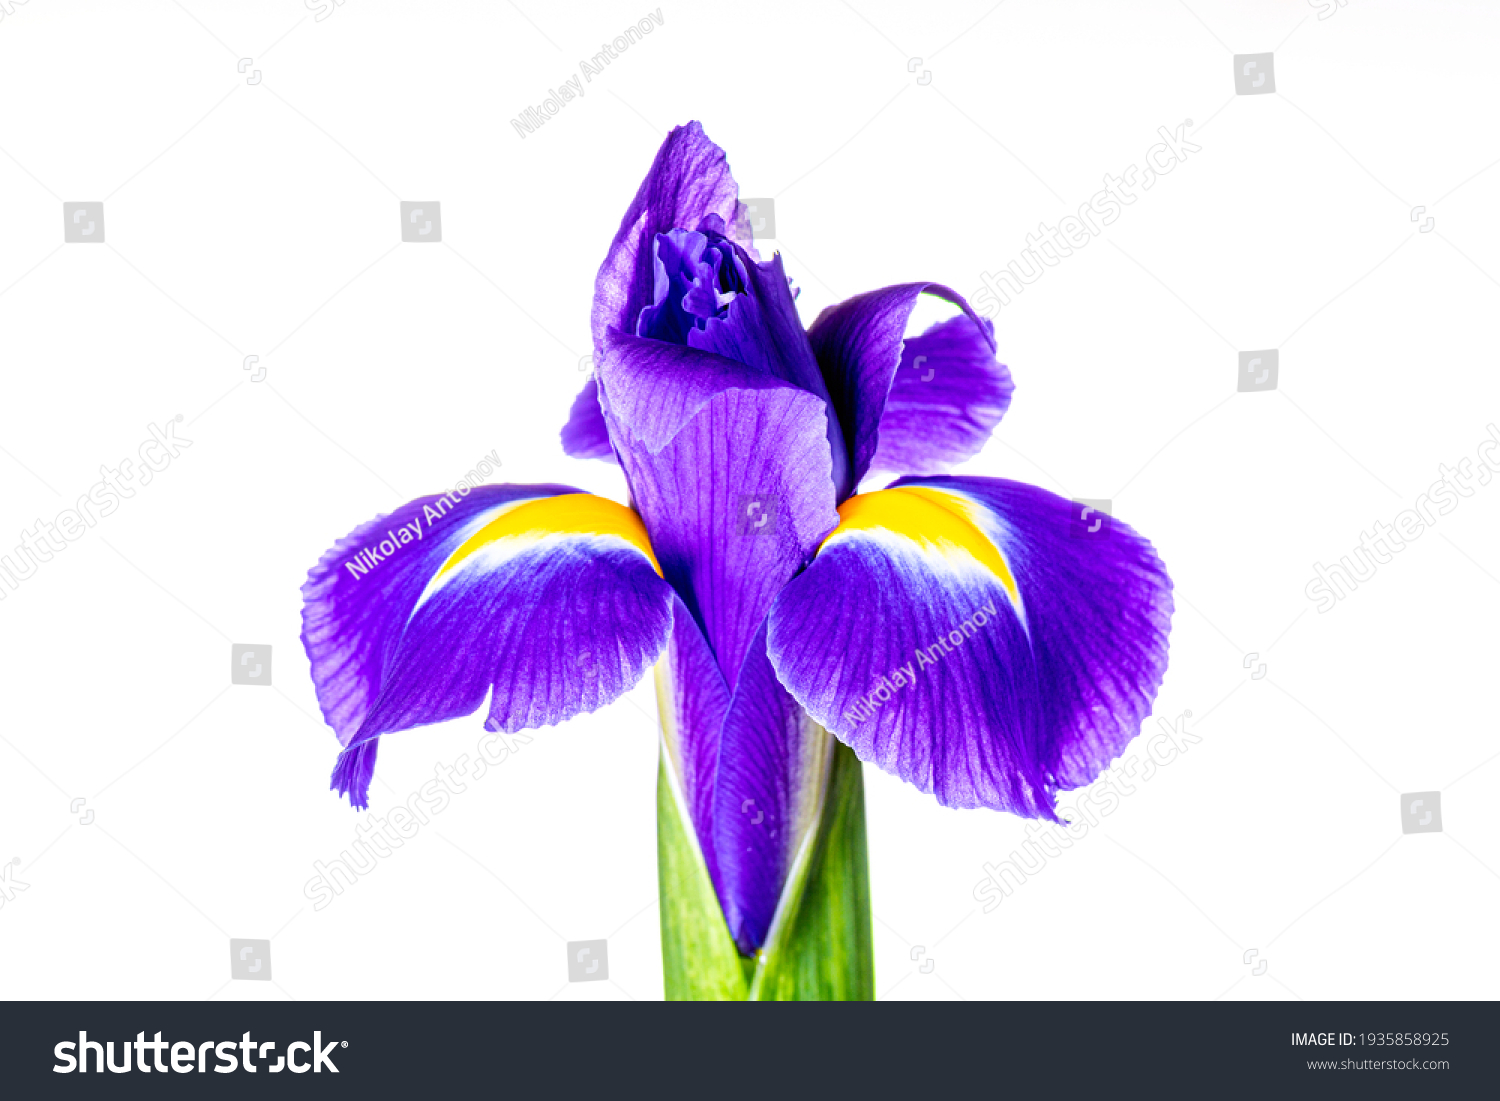 18,18 Irises Images, Stock Photos & Vectors   Shutterstock